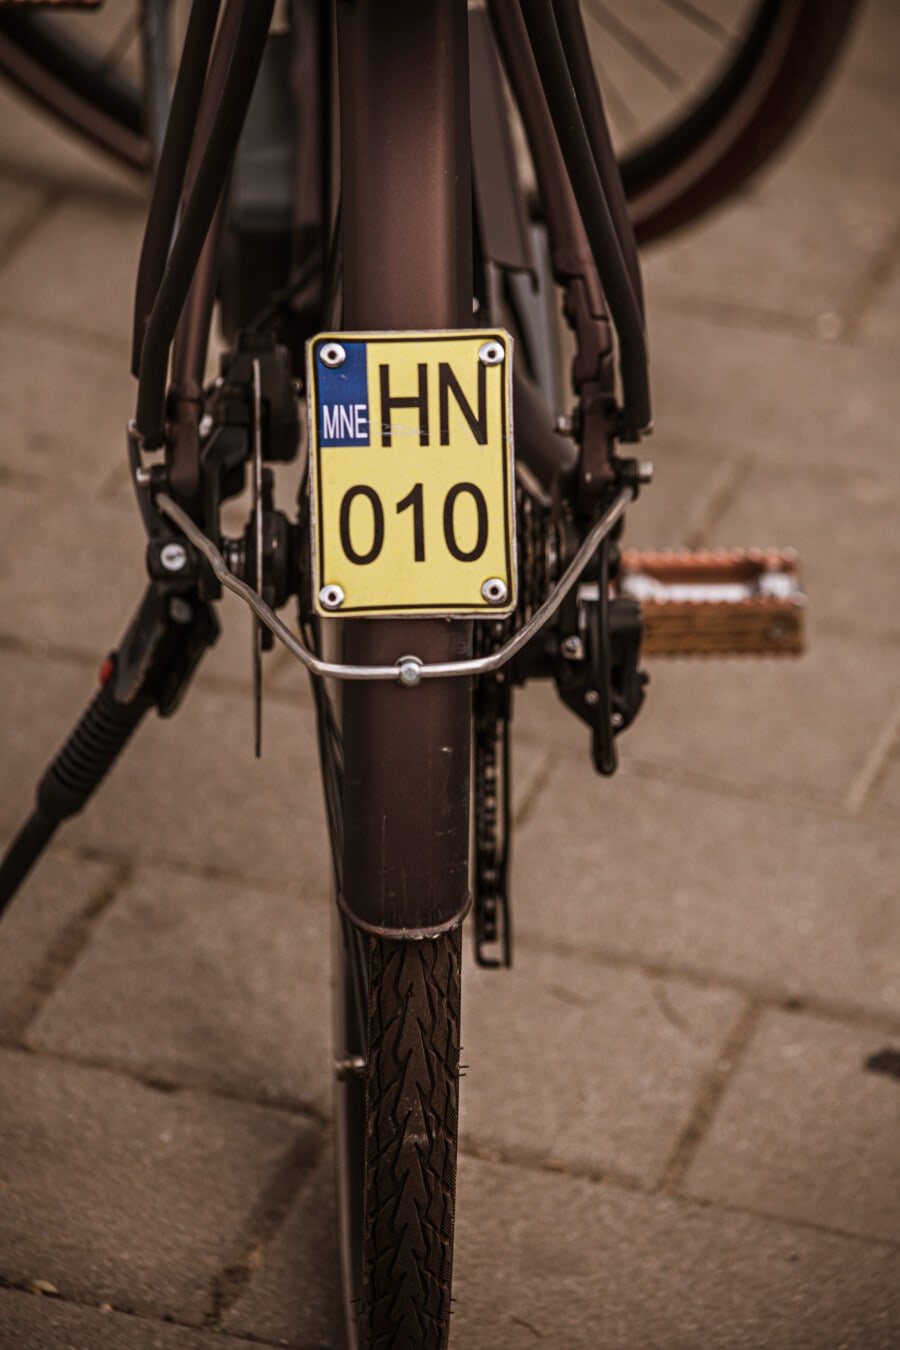 registration plates, bicycle, sign, nostalgia, vintage, classic, wheel, old, retro, outdoors